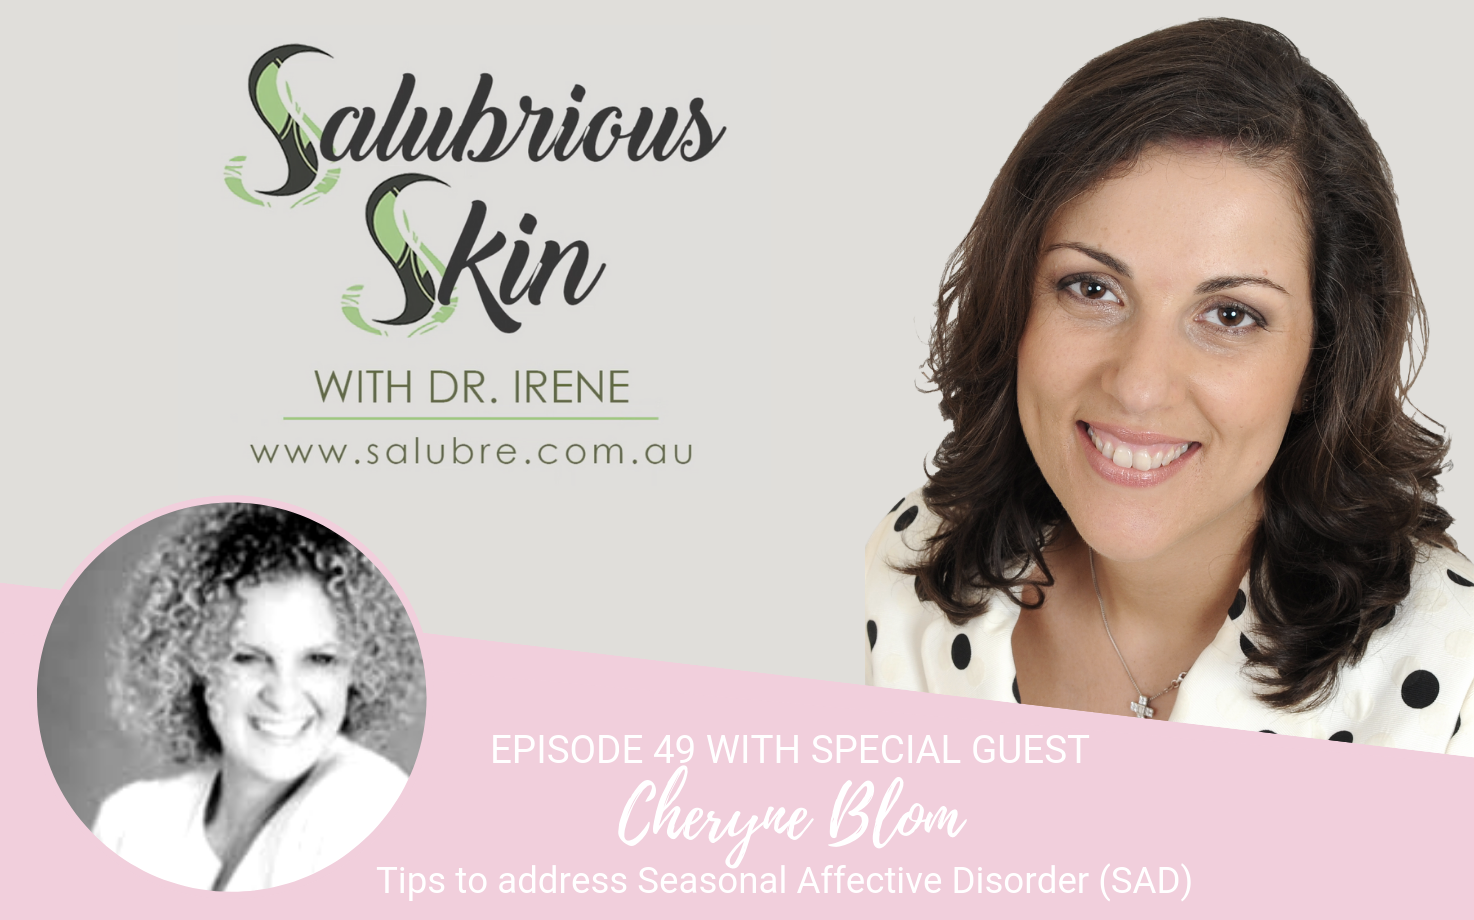 Podcast 49: Tips to address Seasonal Affective Disorder (SAD) from expert Cheryne Blom